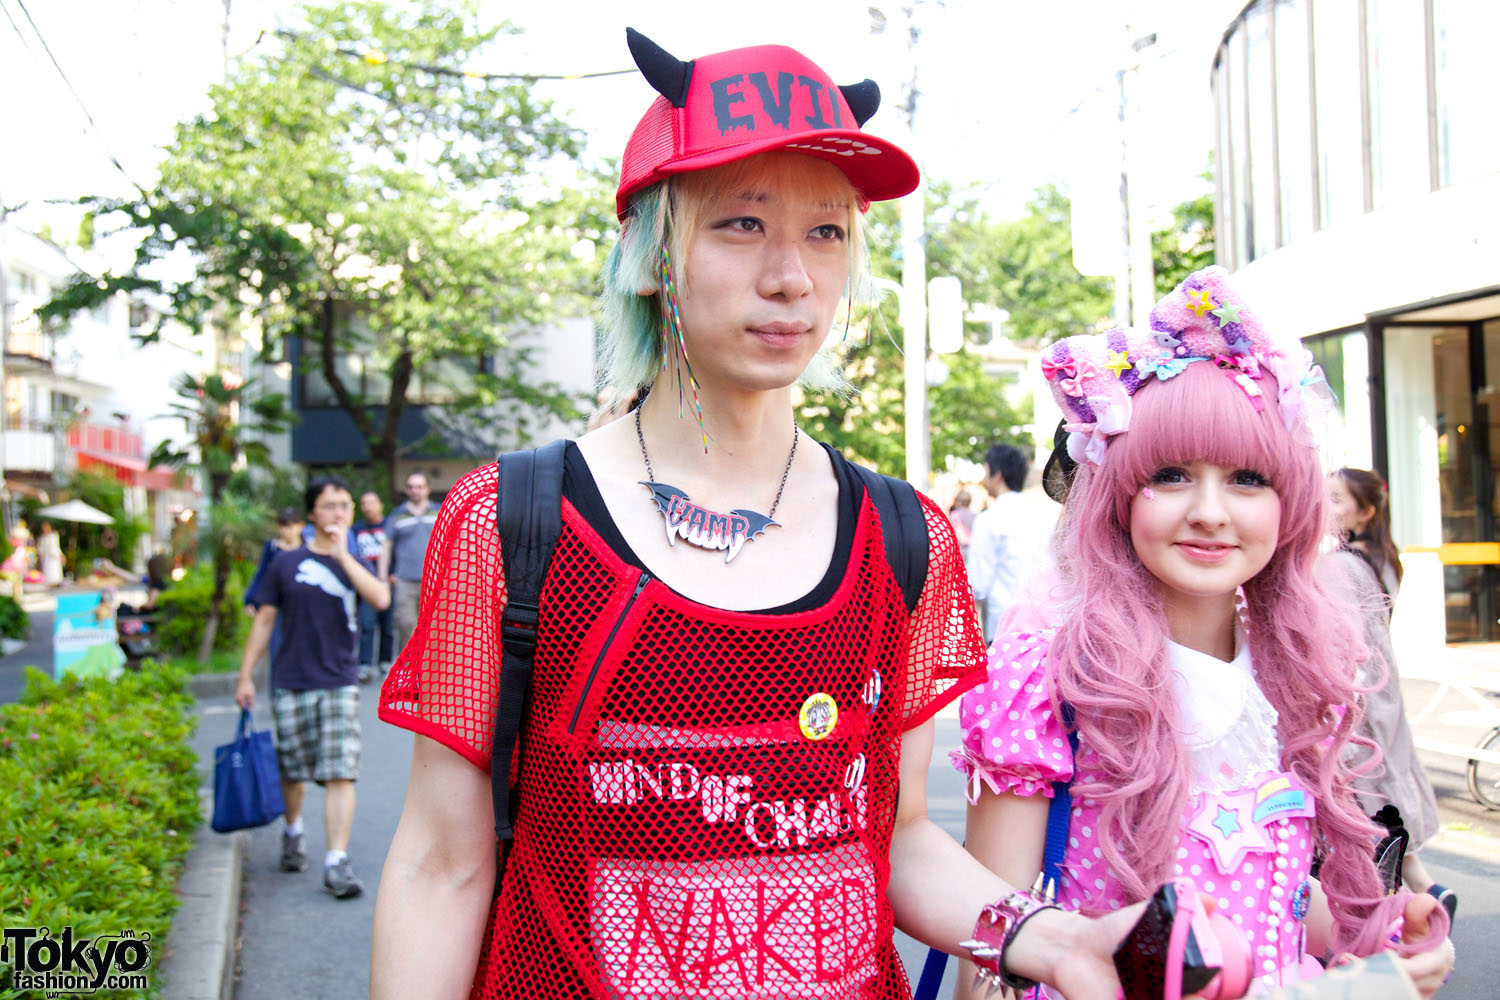 Harajuku Fashion Walk #10 - Pictures & Video